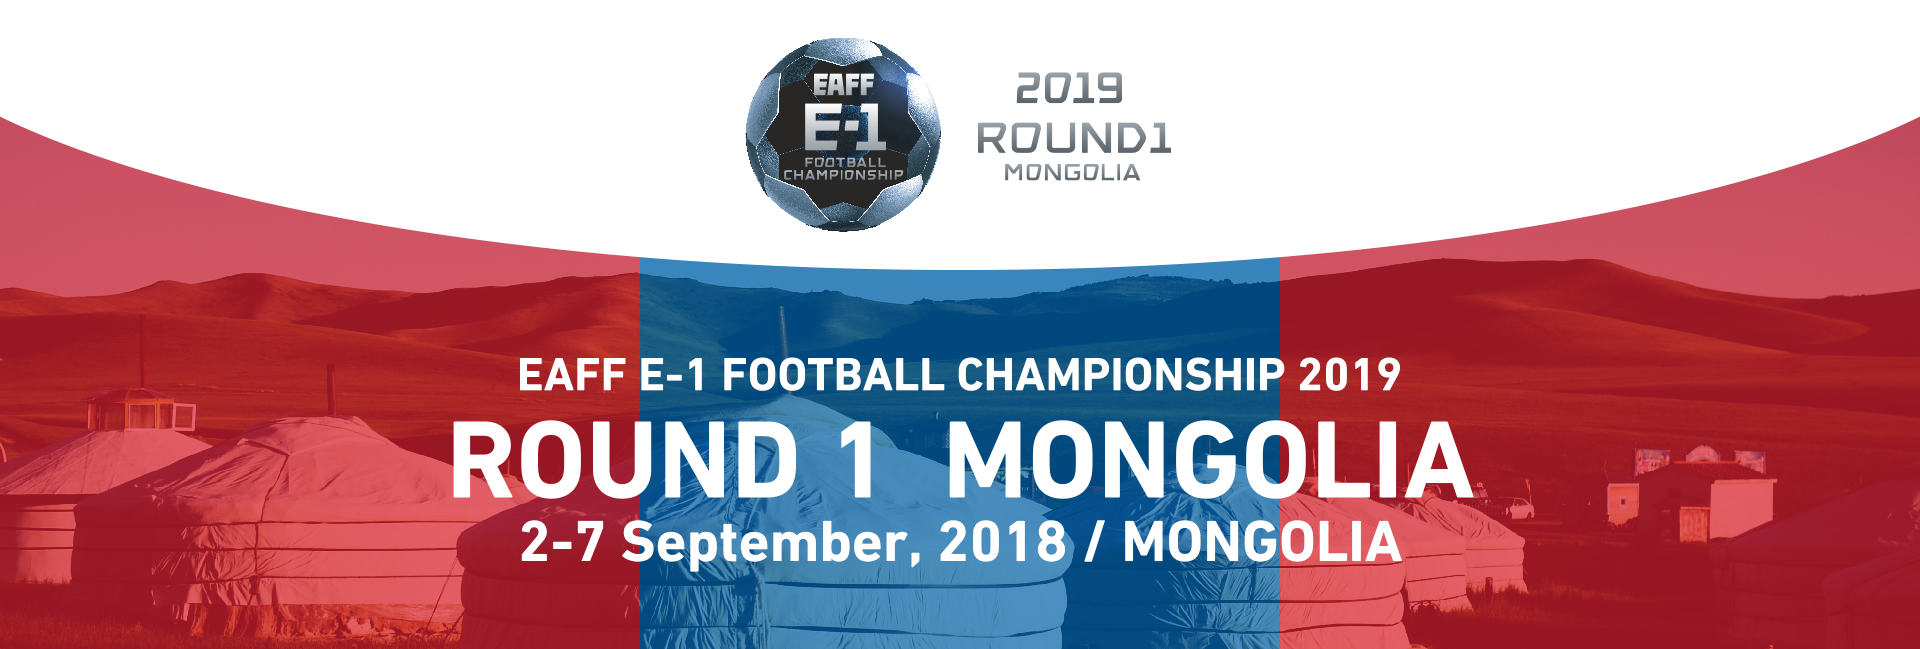 EAFF E-1 Football Championship 2019 Preliminary Round 1 Mongolia